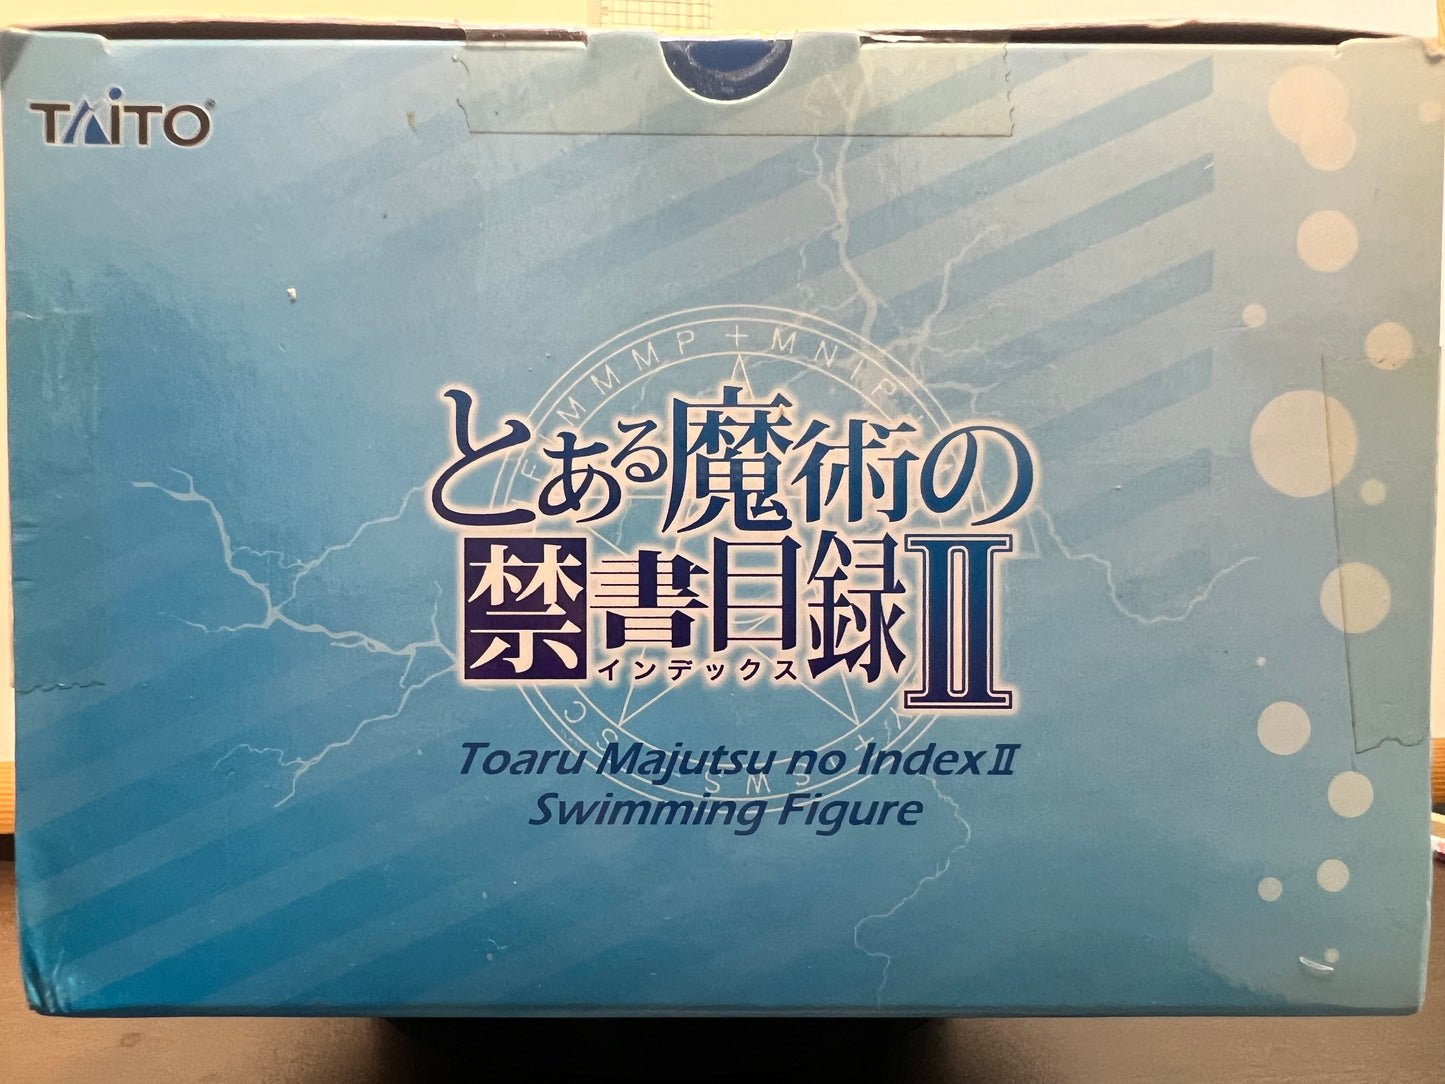 Toaru Majutsu no Index 2 A Certain Magical Index Swimming Figure Kanzaki Kaori Taito Prize #208